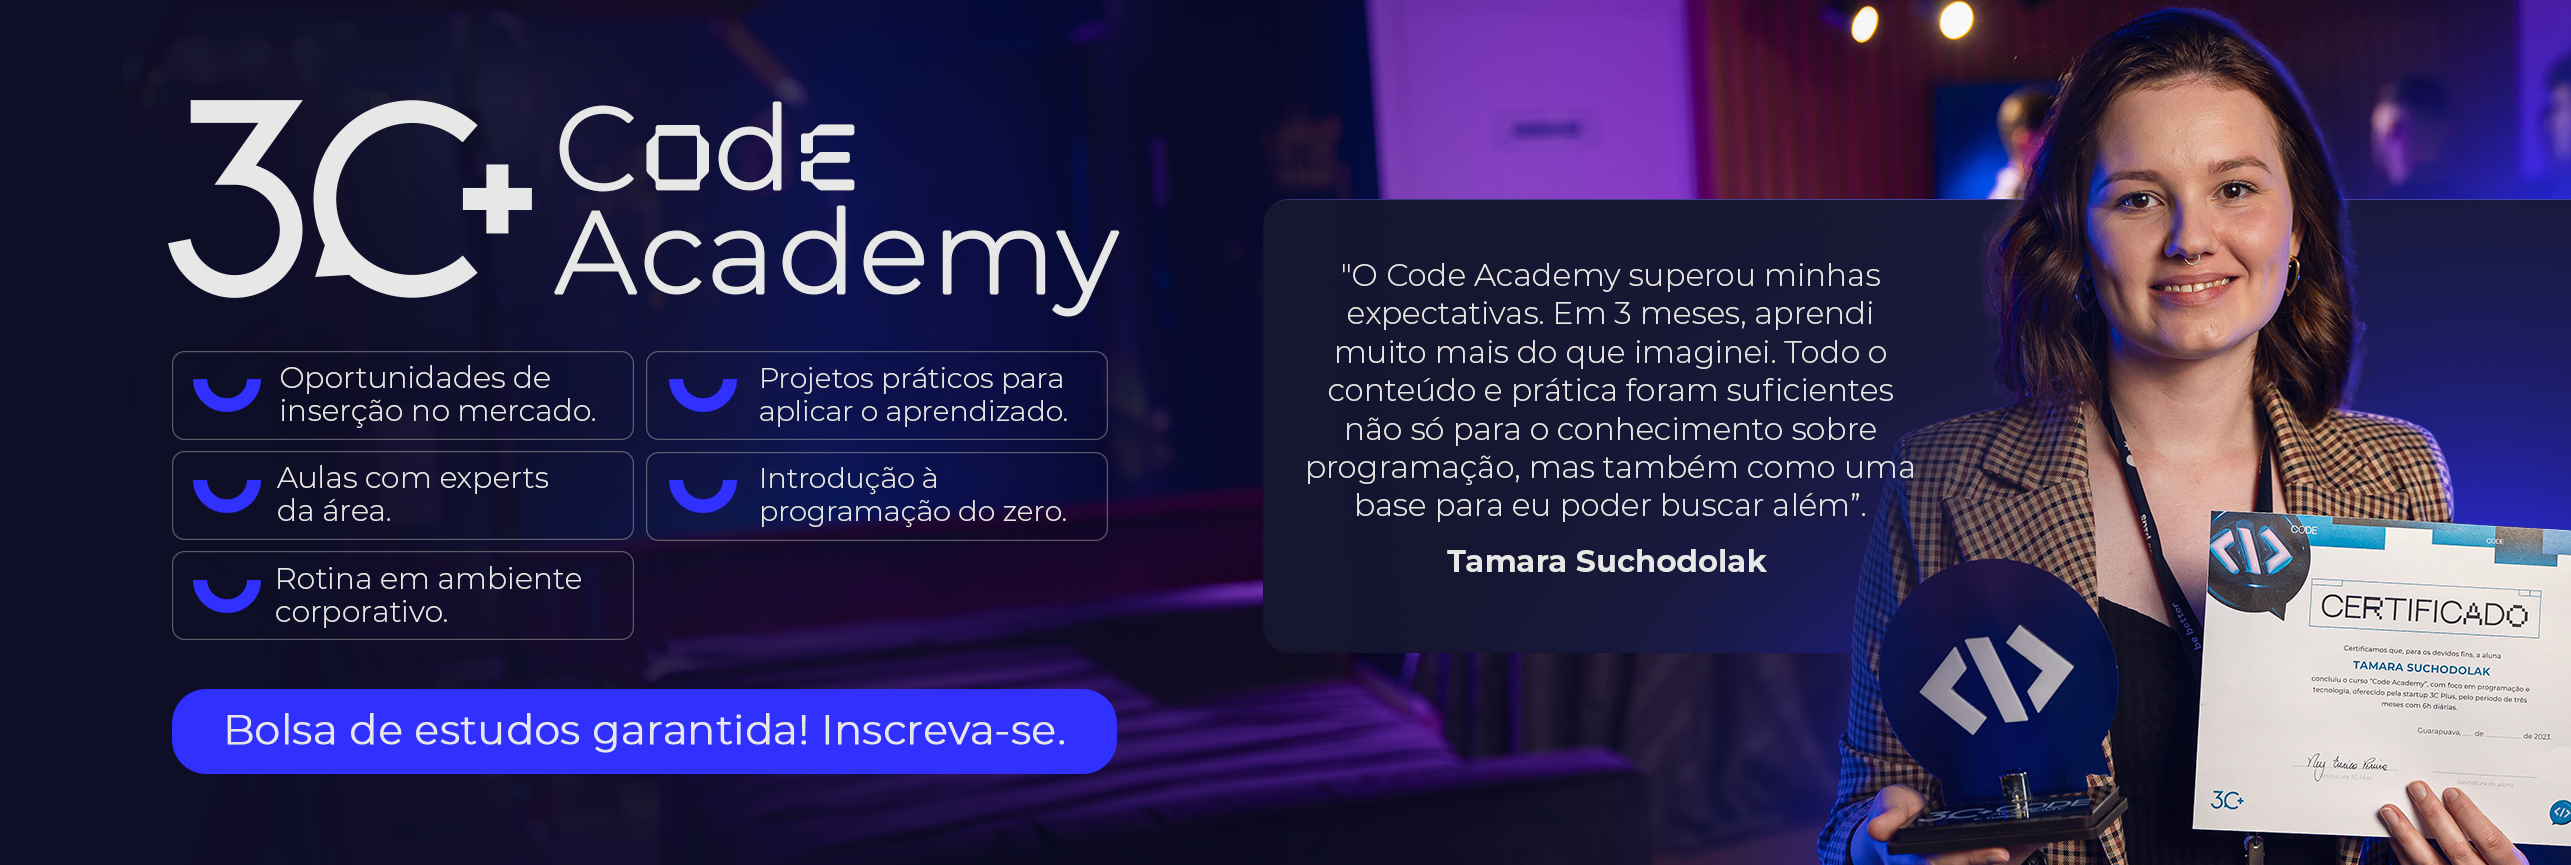 banner 2 - Code academy